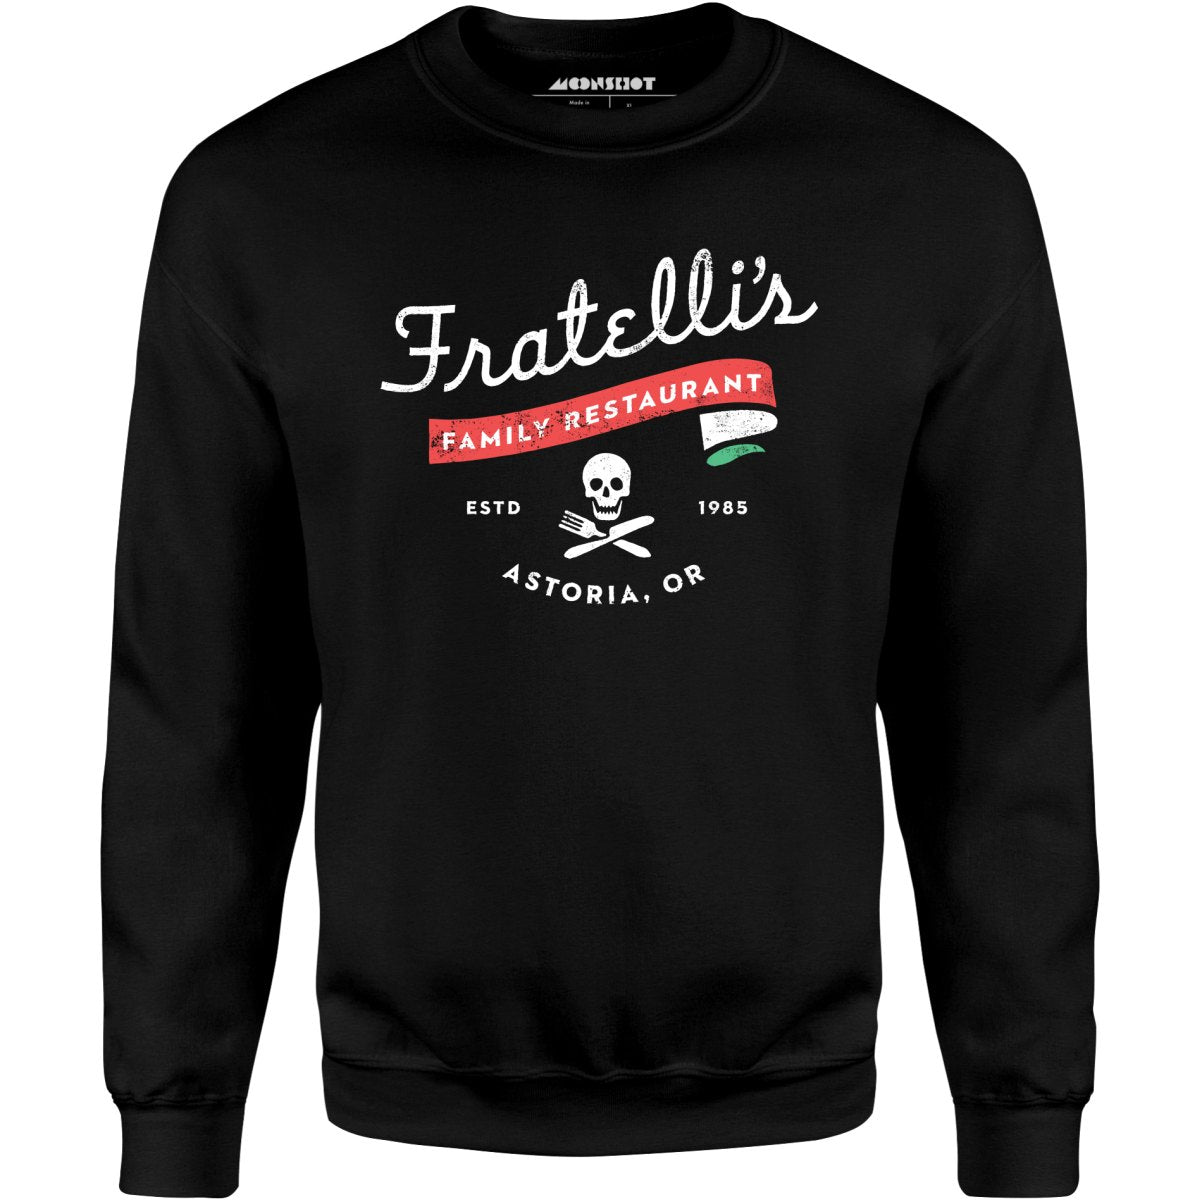 Fratelli's Family Restaurant - Unisex Sweatshirt